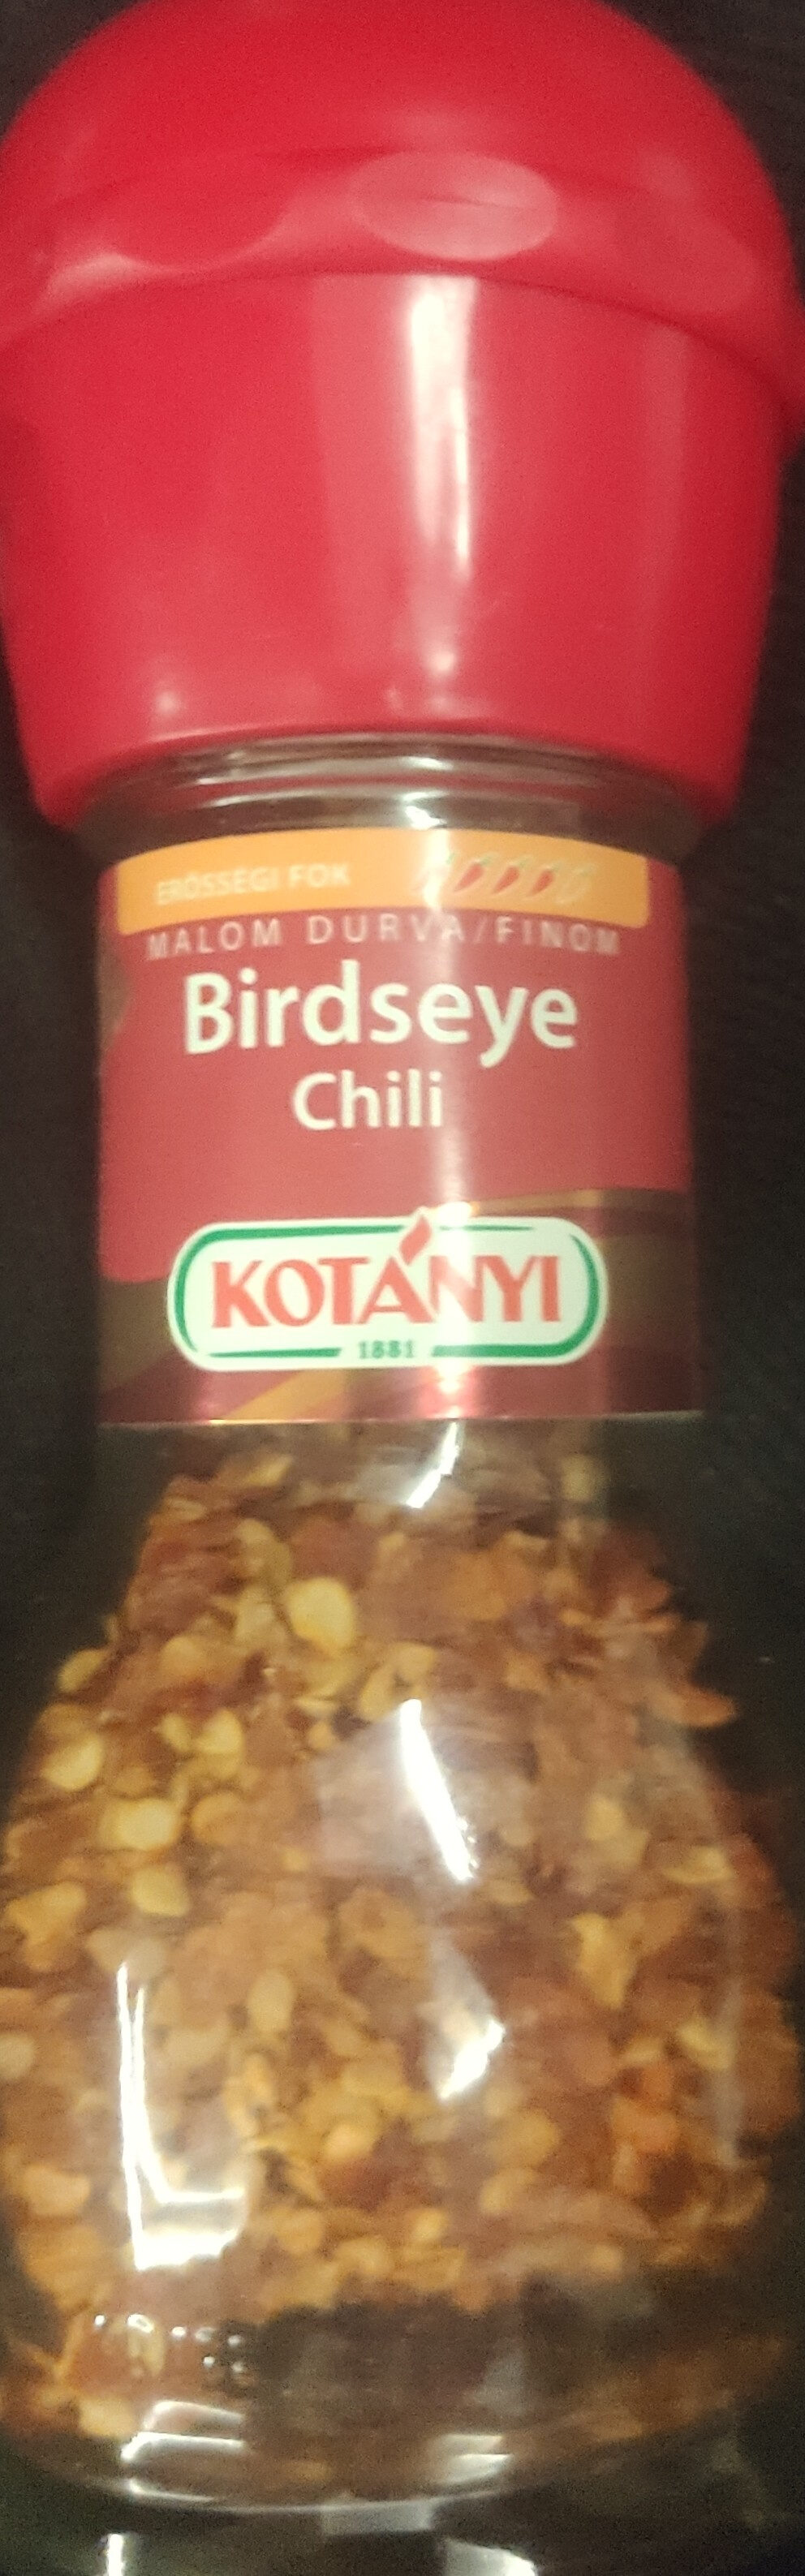 birdseyechili - Product - hu